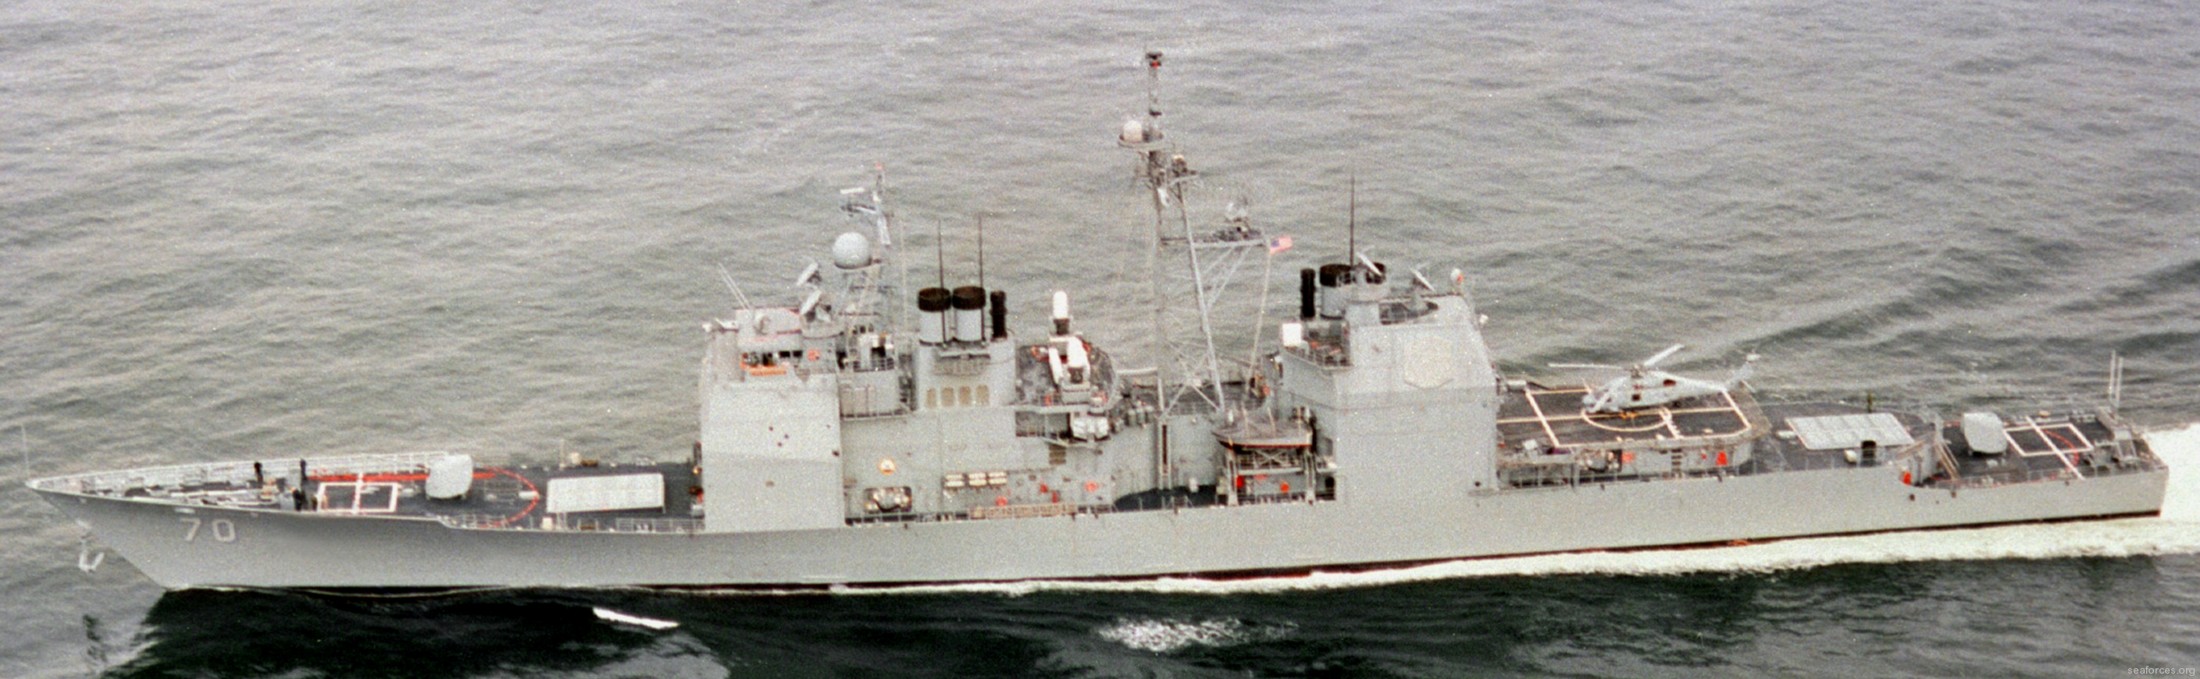 cg-70 uss lake erie ticonderoga class guided missile cruiser navy 78